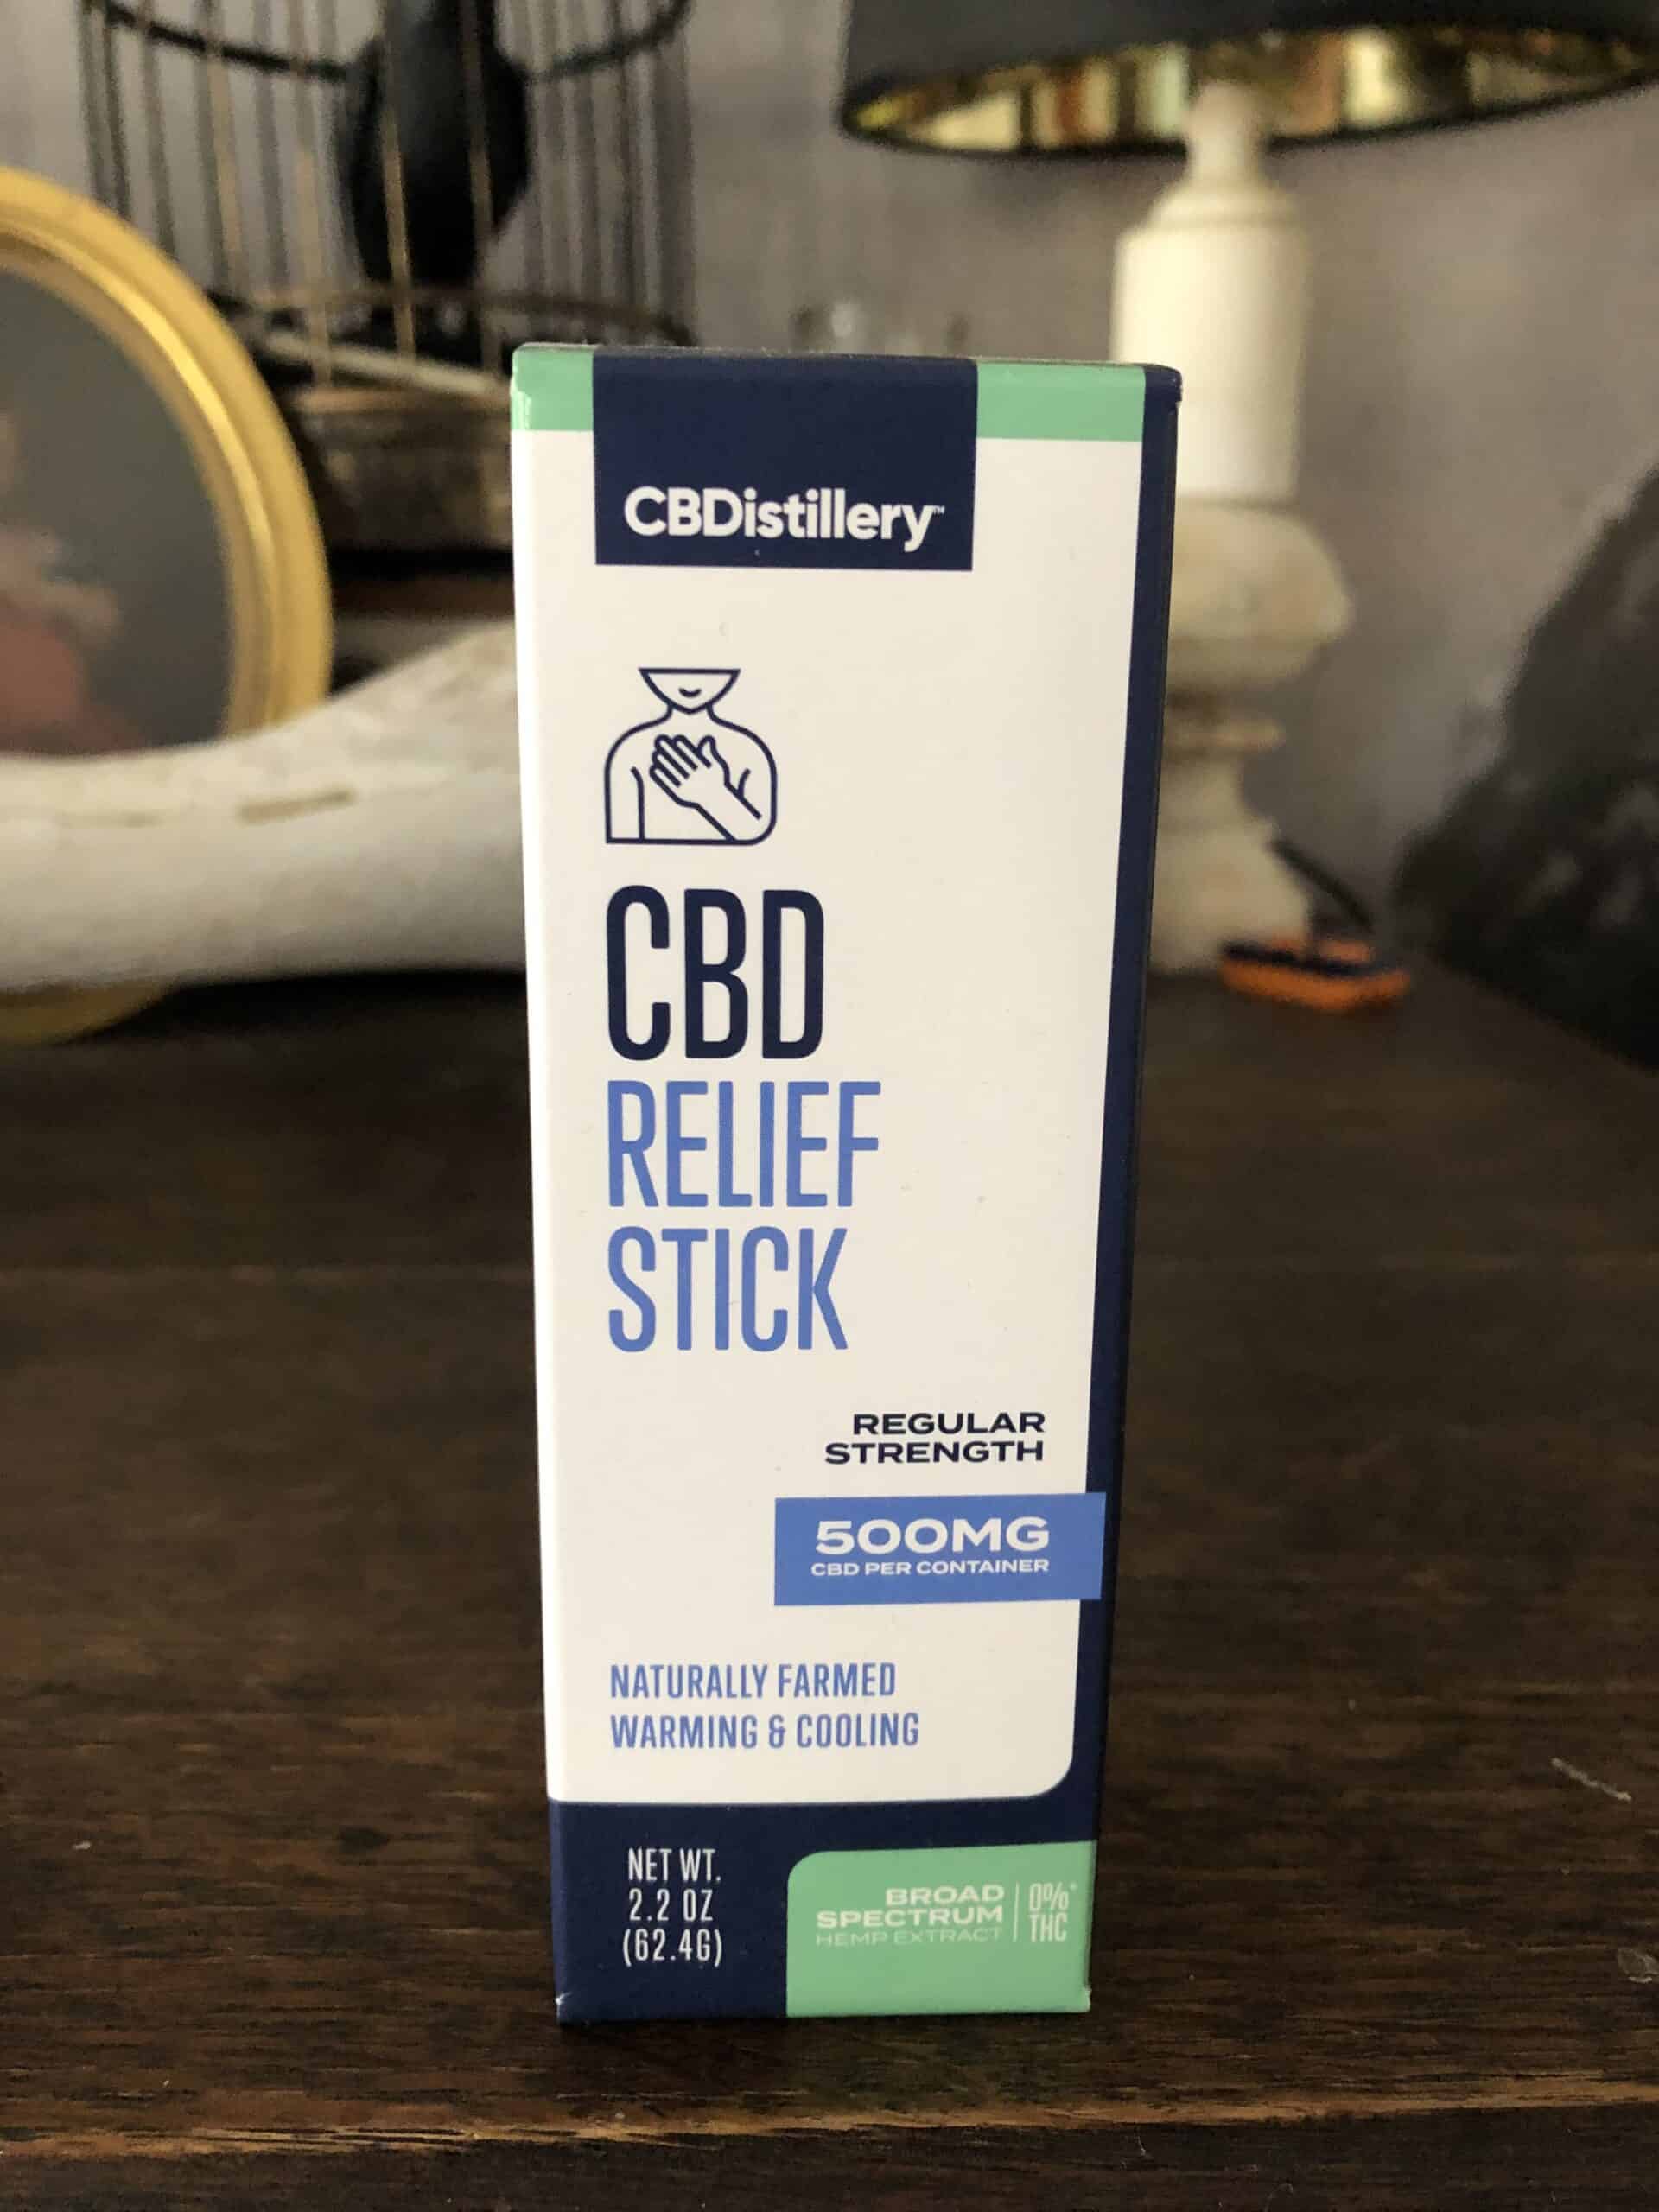 Cbdistillery CBD Relief Stick Save On Cannabis Review